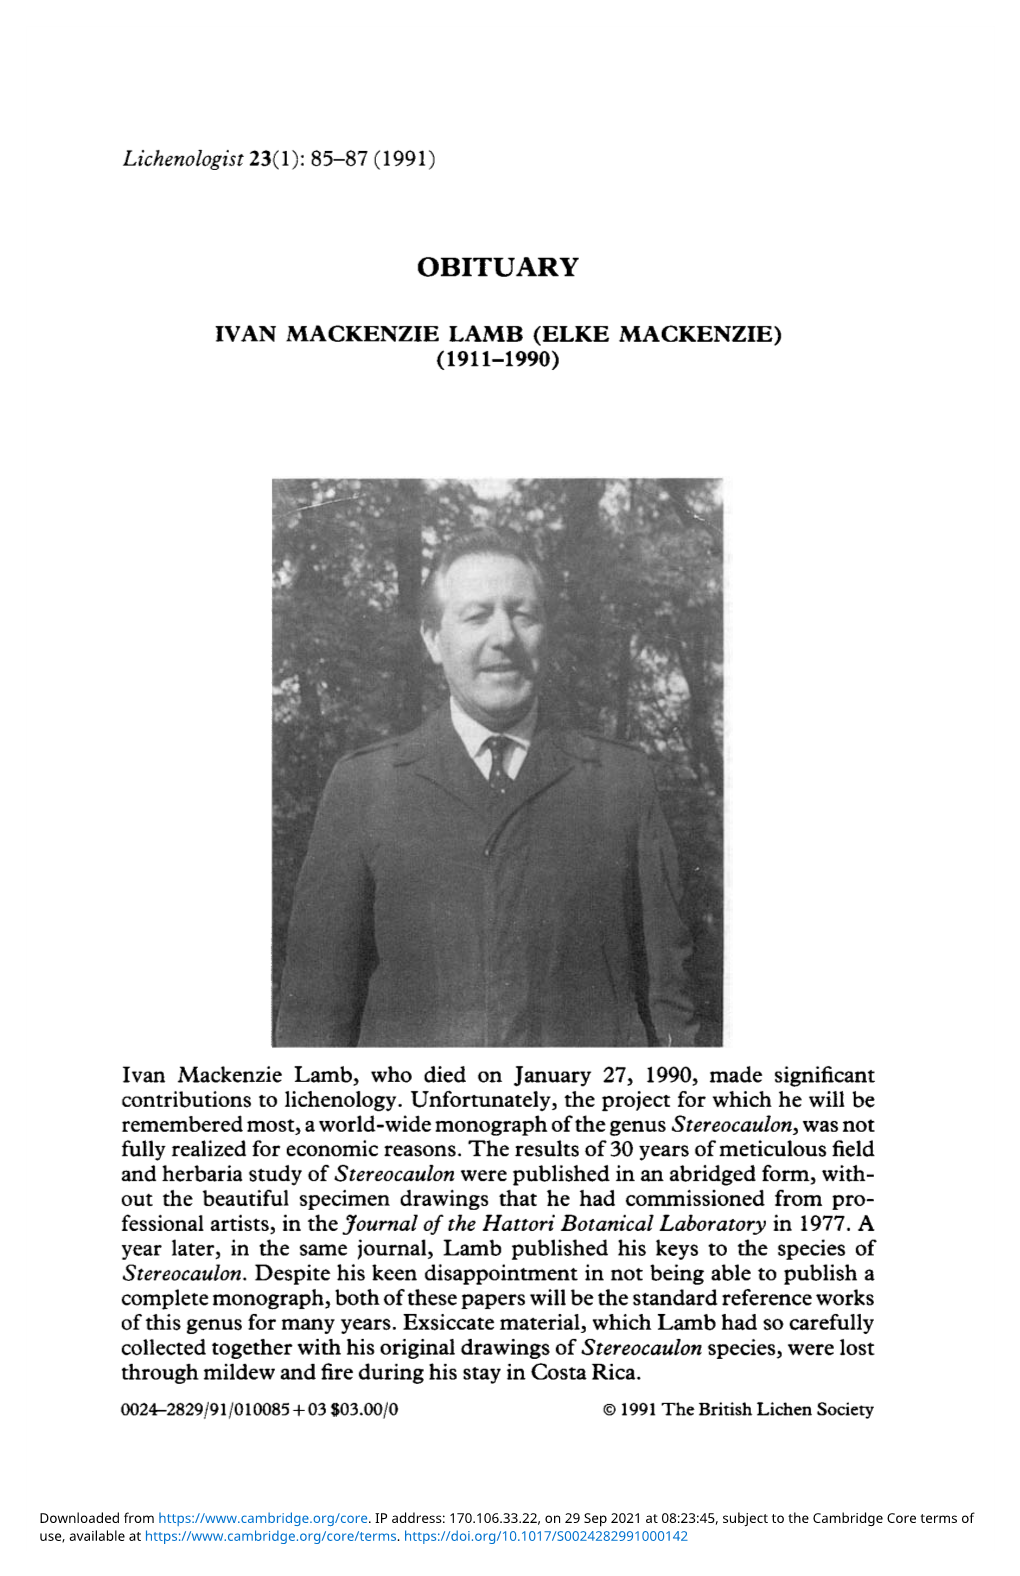 Ivan Mackenzie Lamb (Elke Mackenzie) (1911-1990)